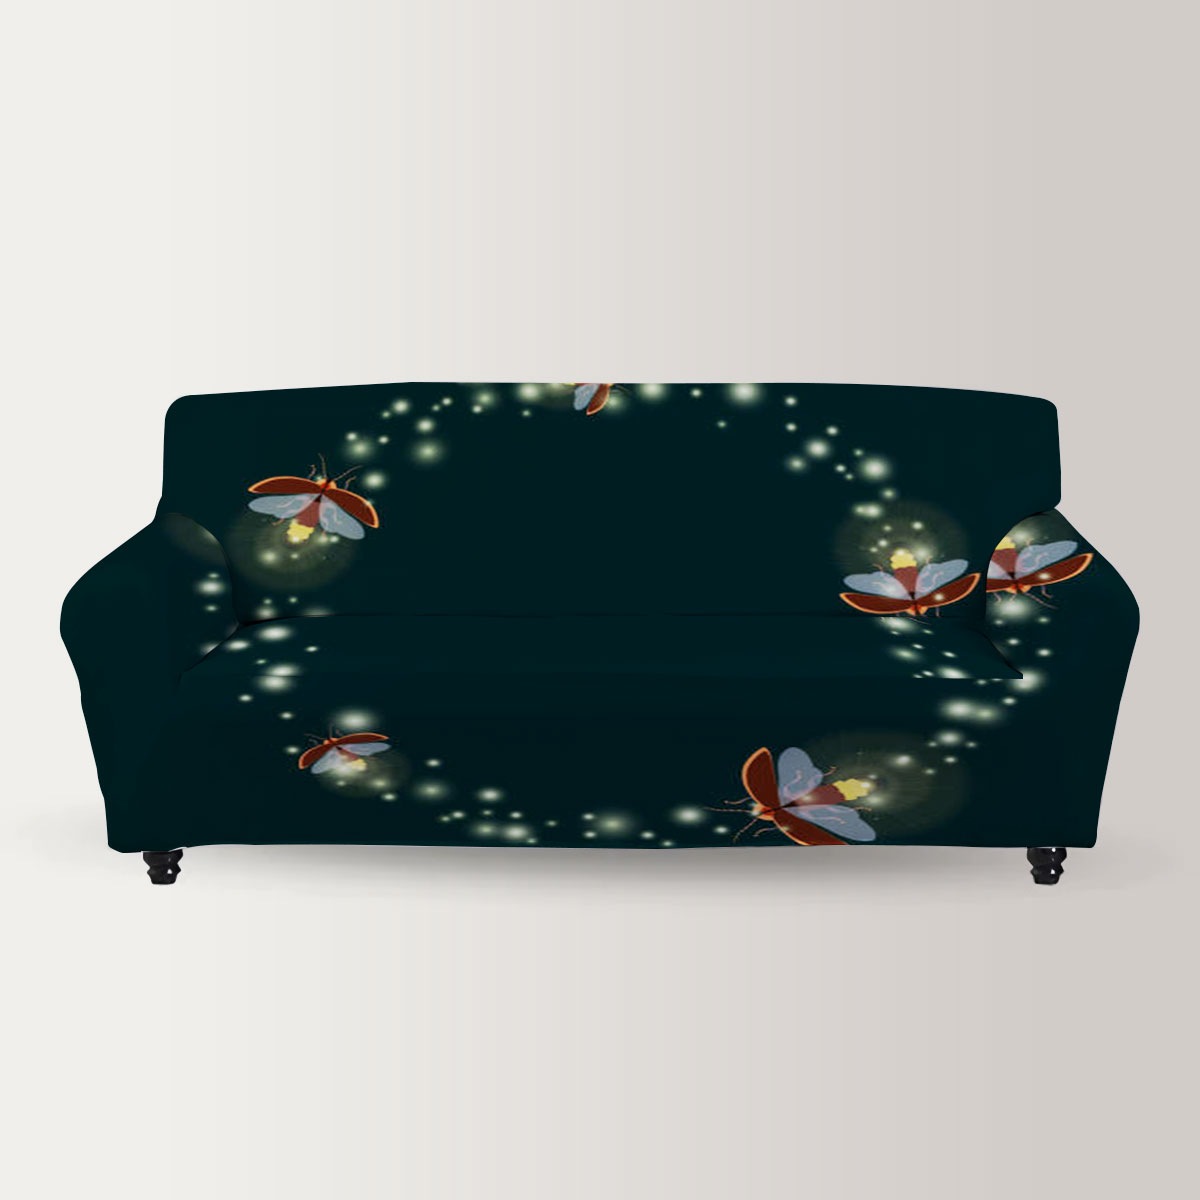 Circle Fireflies Sofa Cover